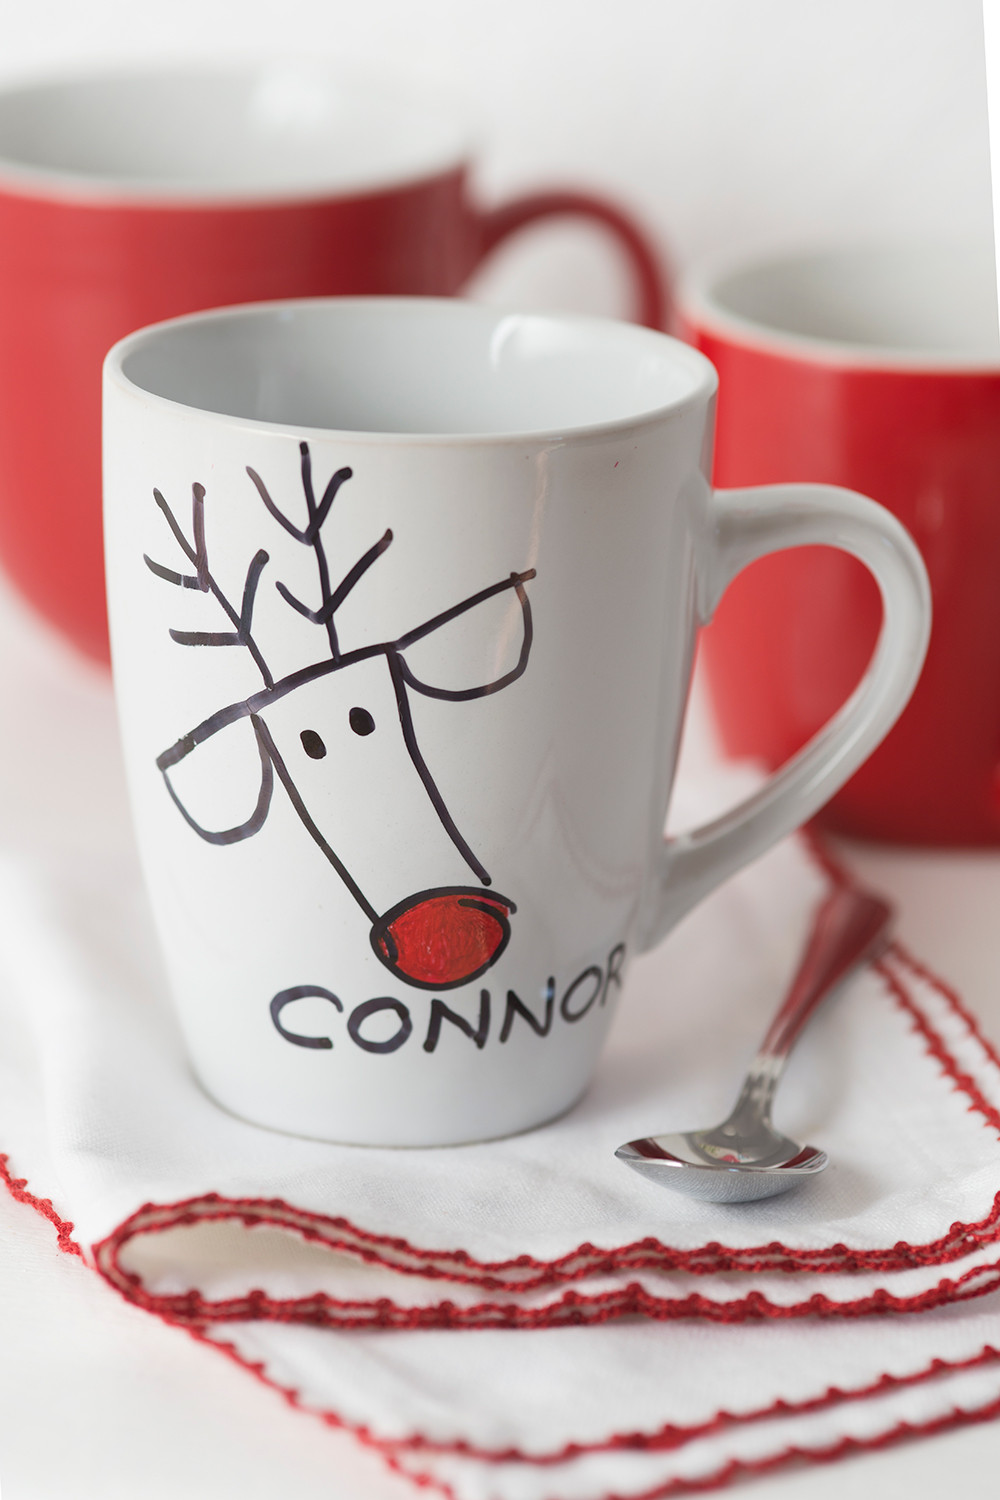 Best ideas about DIY Christmas Mug
. Save or Pin Christmas Sharpie mug Now.